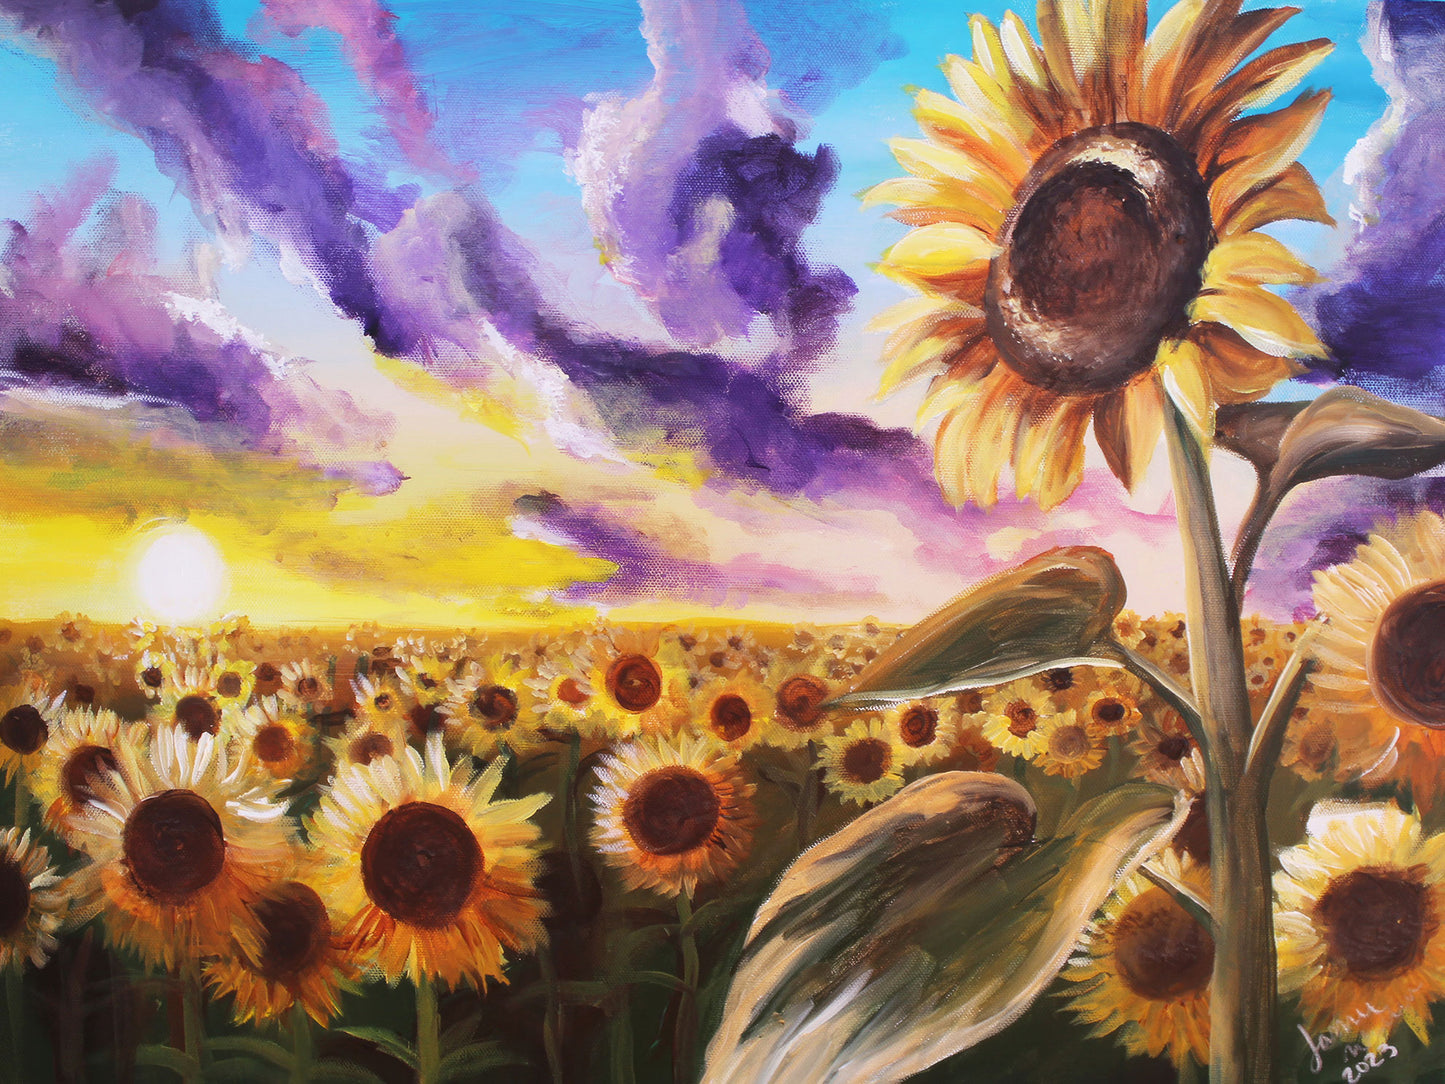 Jamie Whitlow - "Sunflowers at Sunset" Print